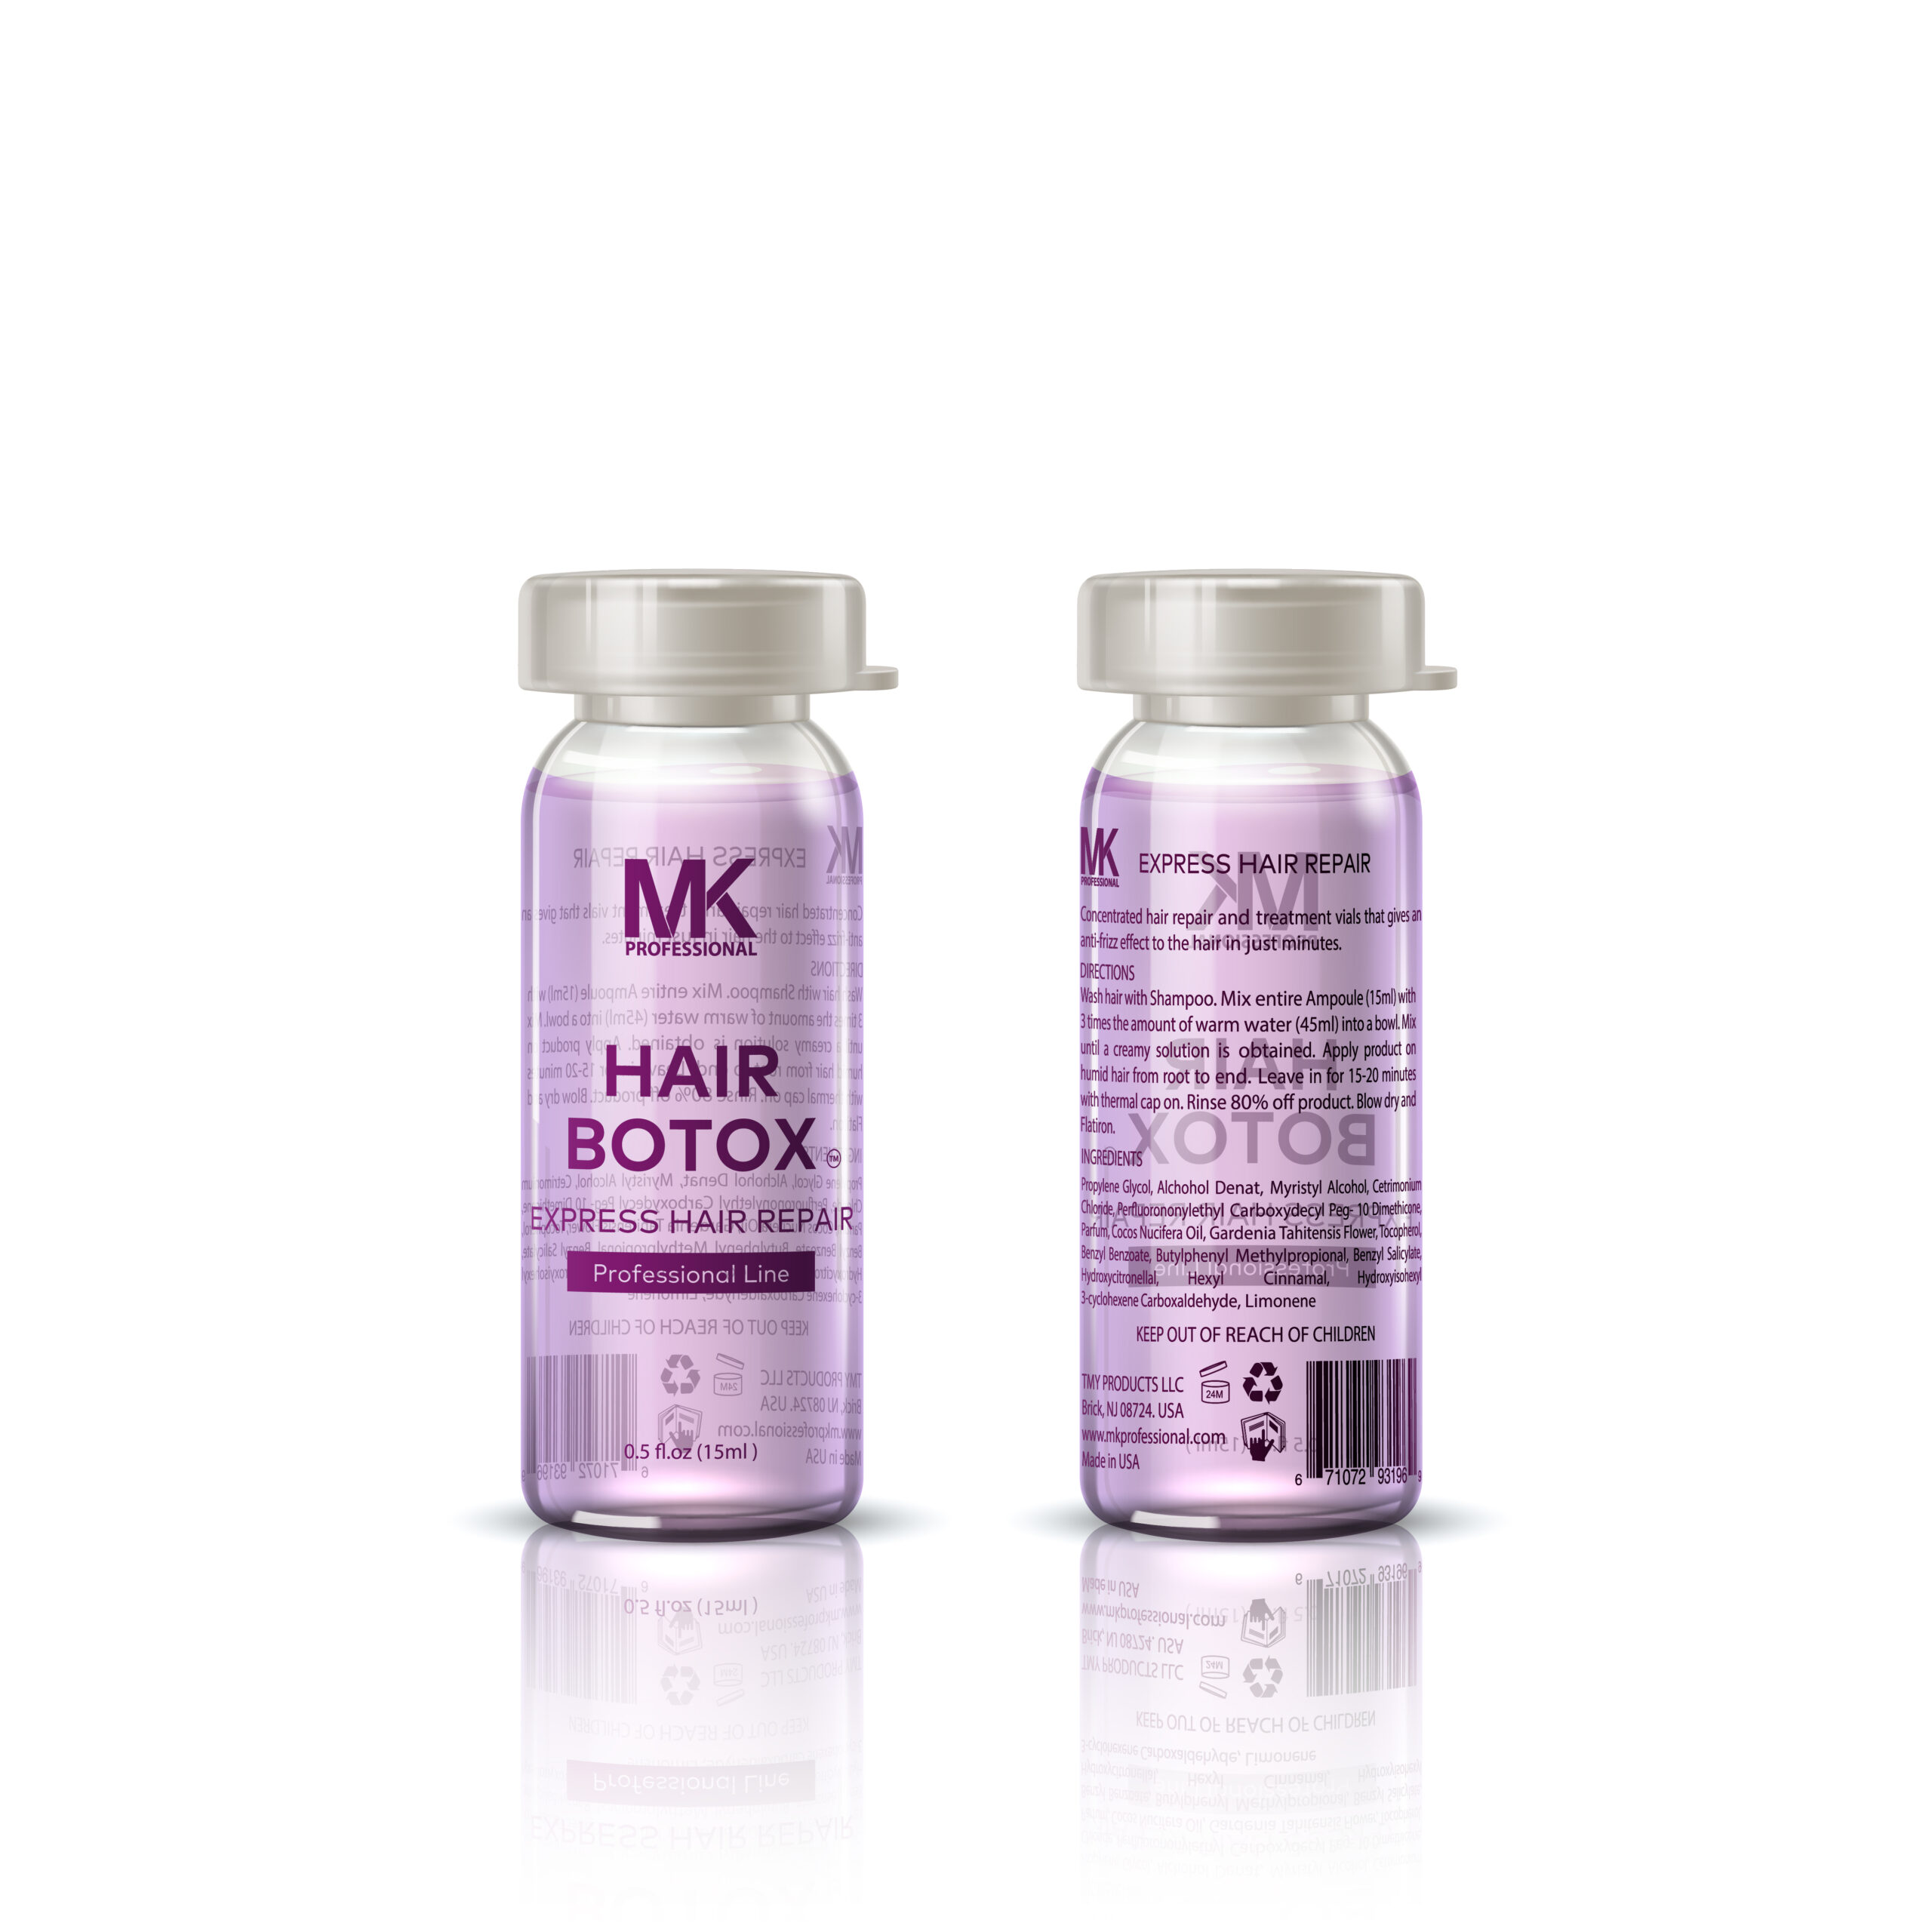 MK Hair Botox Express Repair Vial 15ml - Majestic Keratin